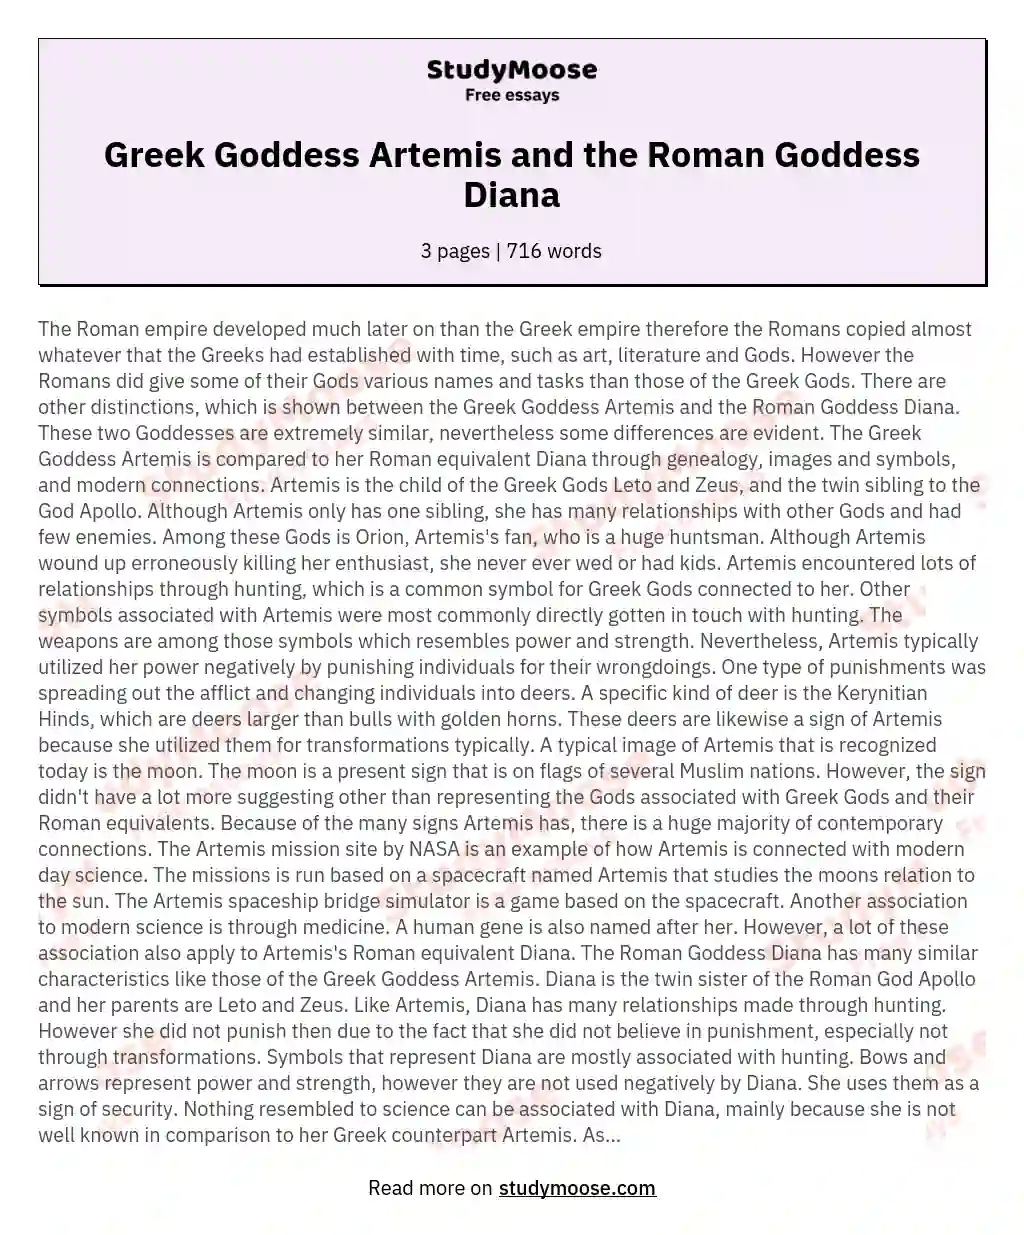 Greek Goddess Artemis and the Roman Goddess Diana essay